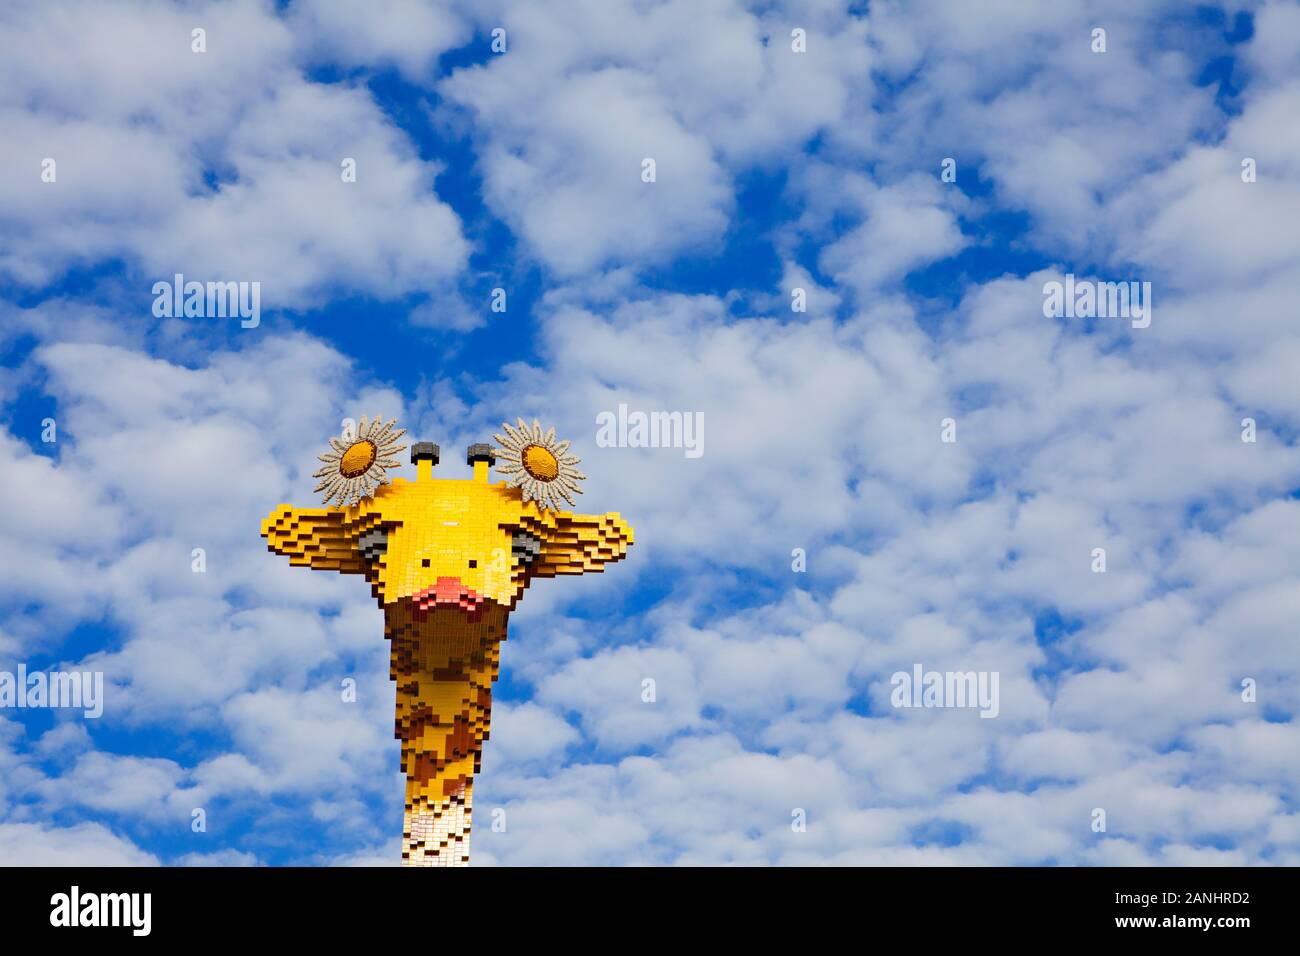 A giraffe built with Lego bricks, LEGOLAND Discovery Centre, Centro, Oberhausen, Germany Stock Photo